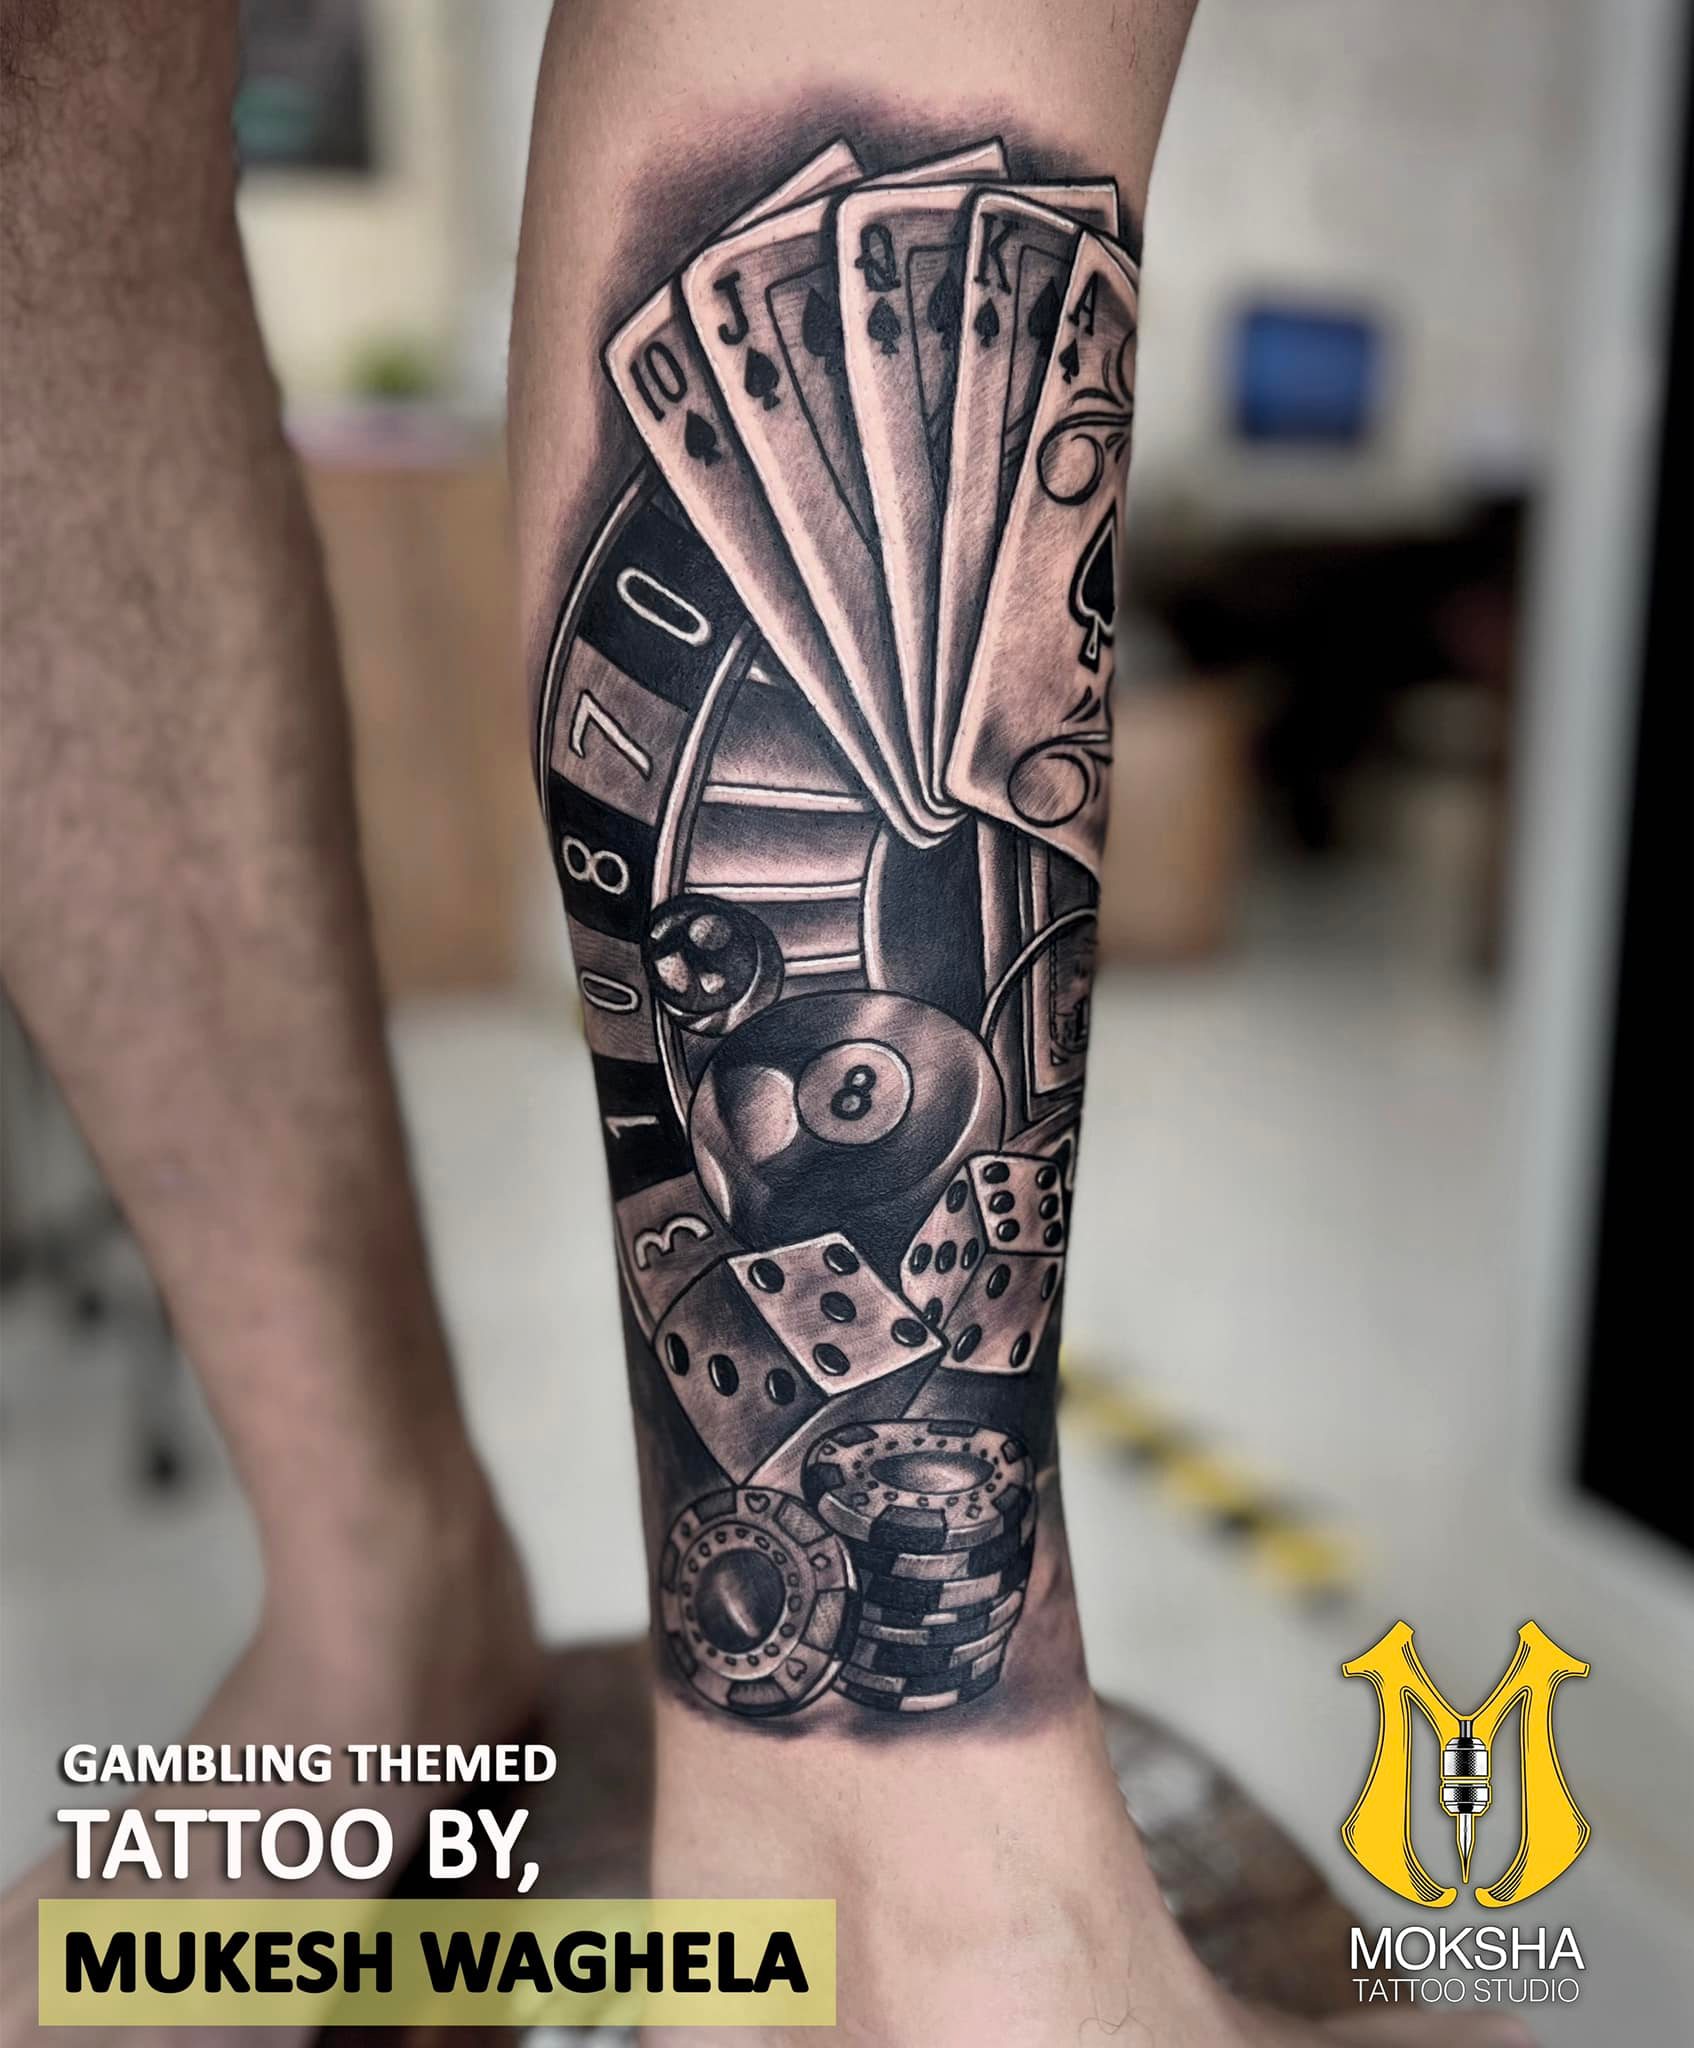 Gambling Themed Tattoo by Mukesh Waghela @Moksha Tattoo Studio, Goa India. Best Tattoo Artist in Goa